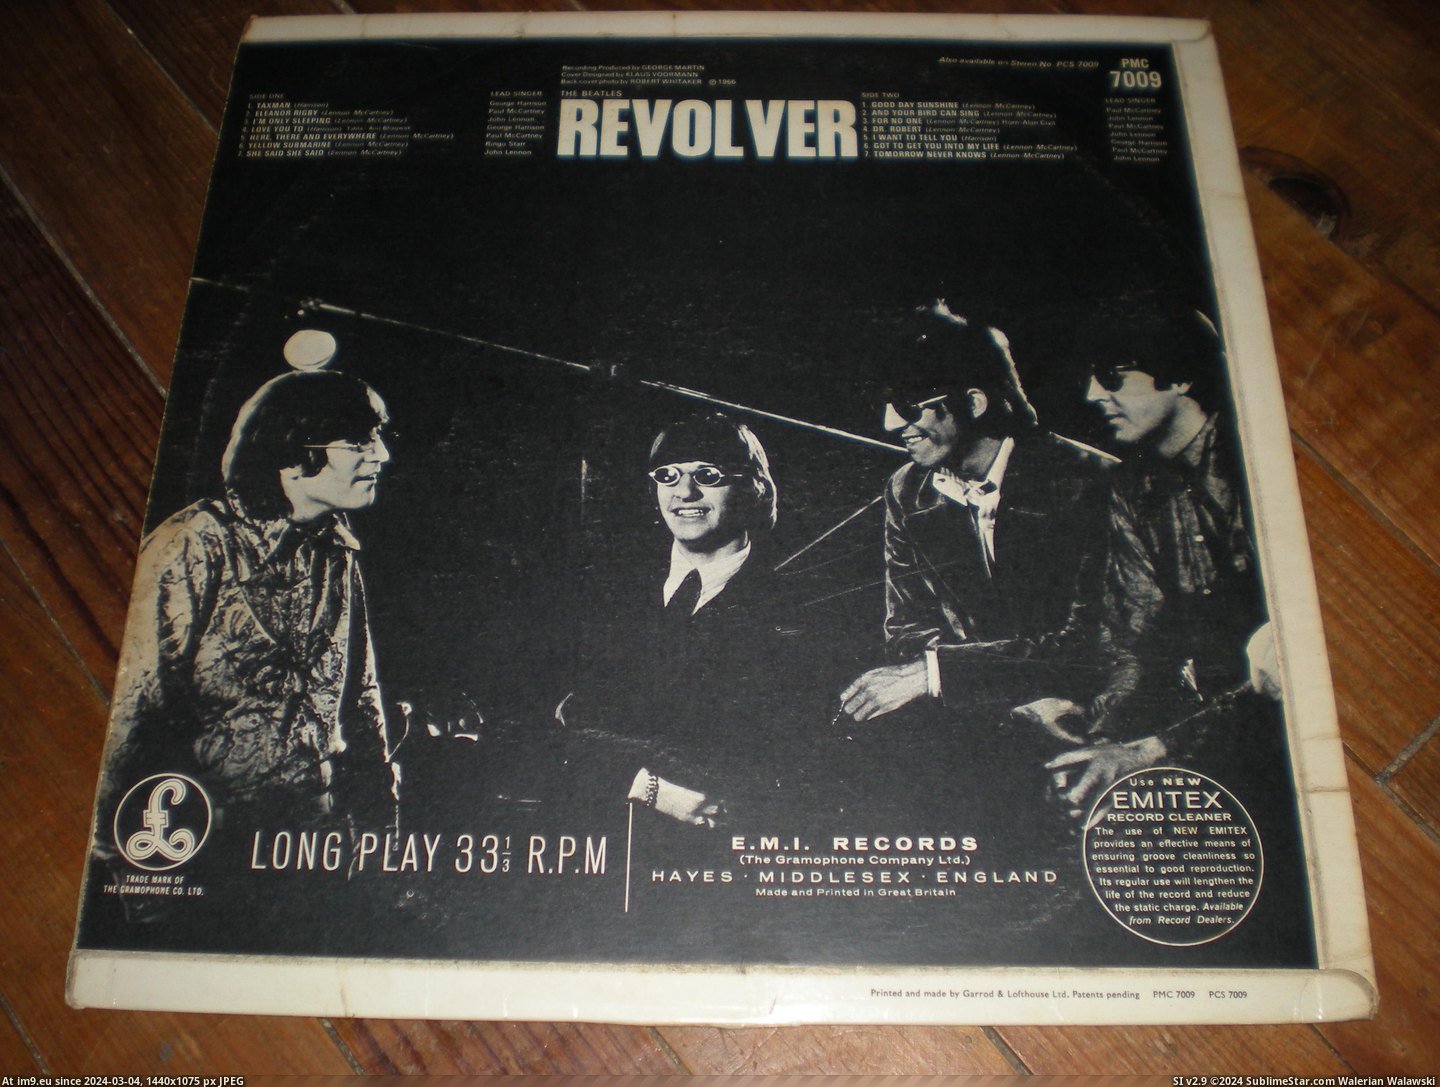  #Revolver  Revolver 07-01 6 Pic. (Изображение из альбом new 1))